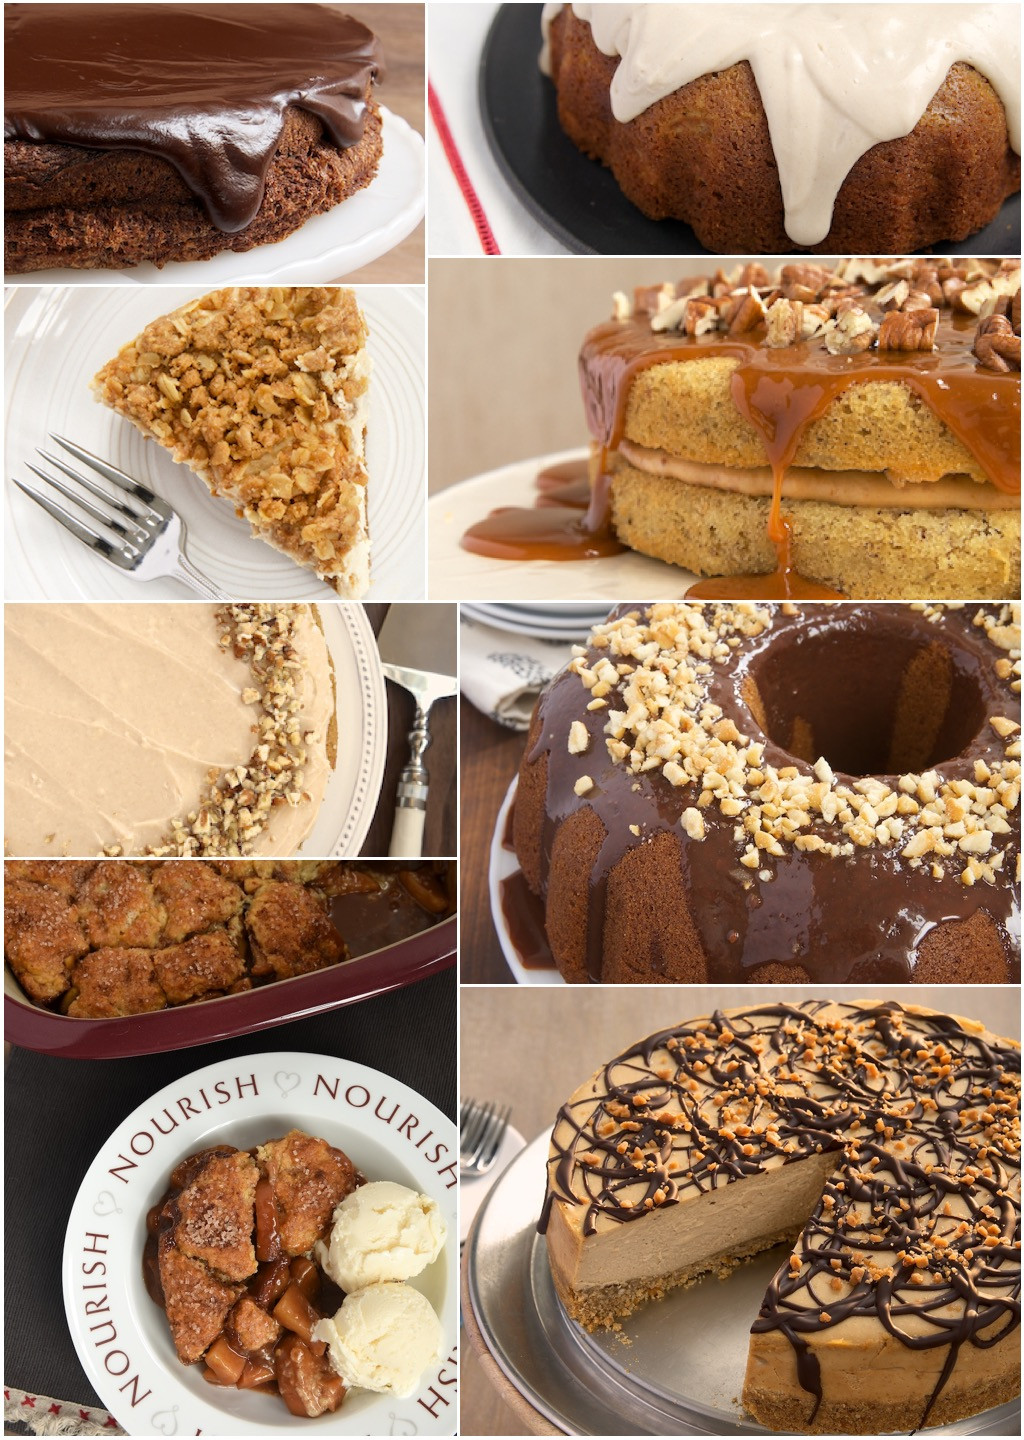 Favorite Thanksgiving Desserts
 Best Thanksgiving Desserts Bake or Break